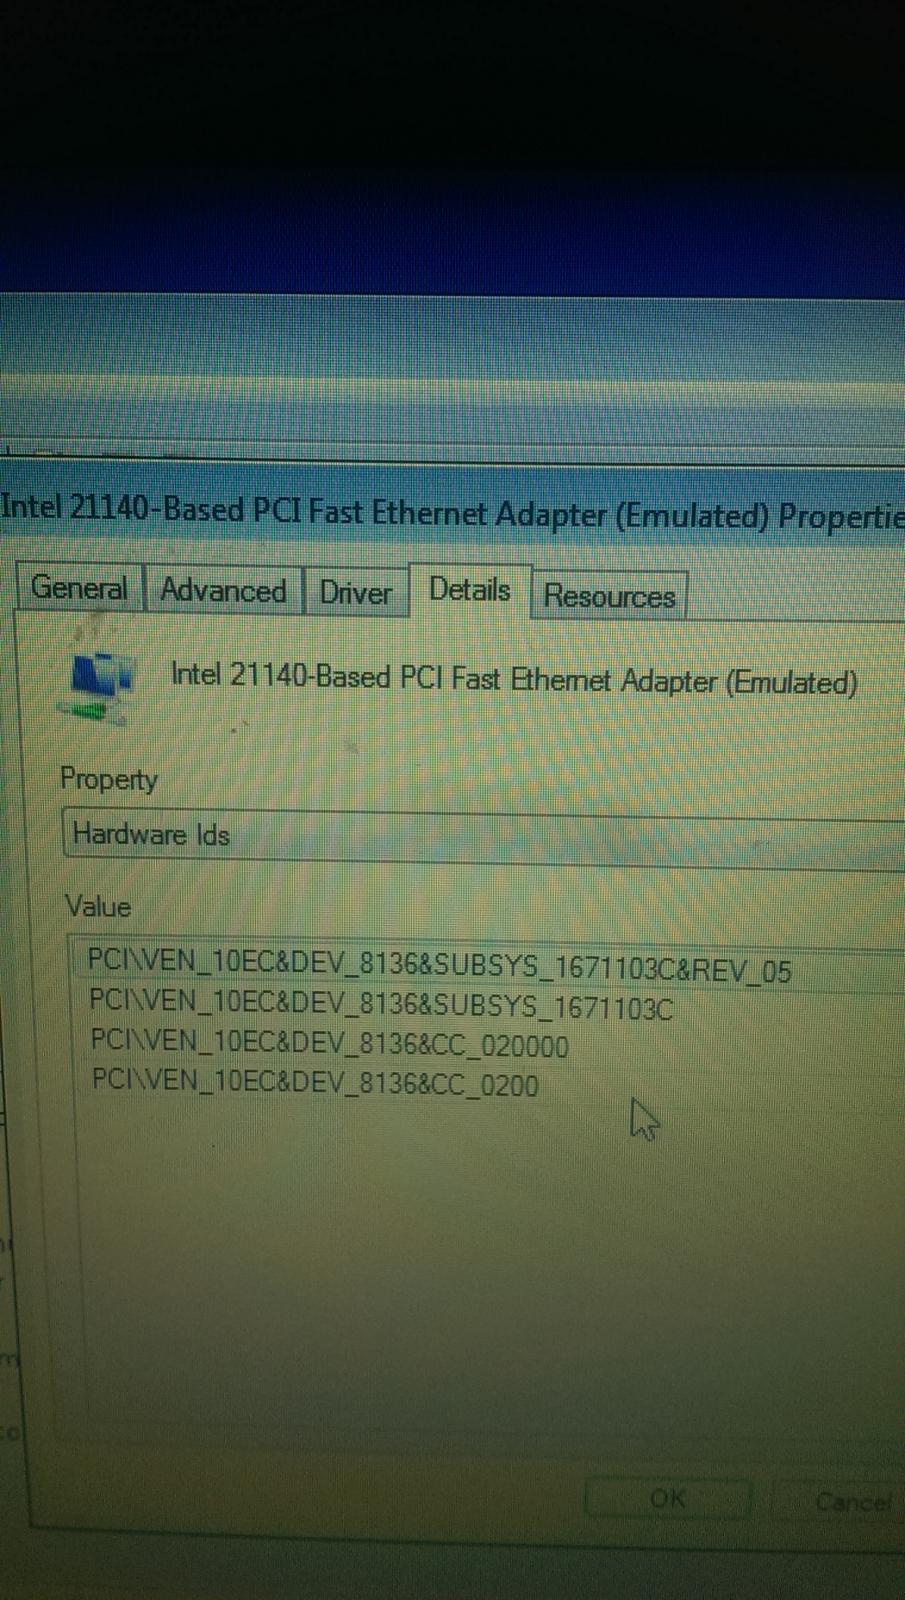 Pci Ven 10ec Dev 8136 Driver Download Windows 7 2